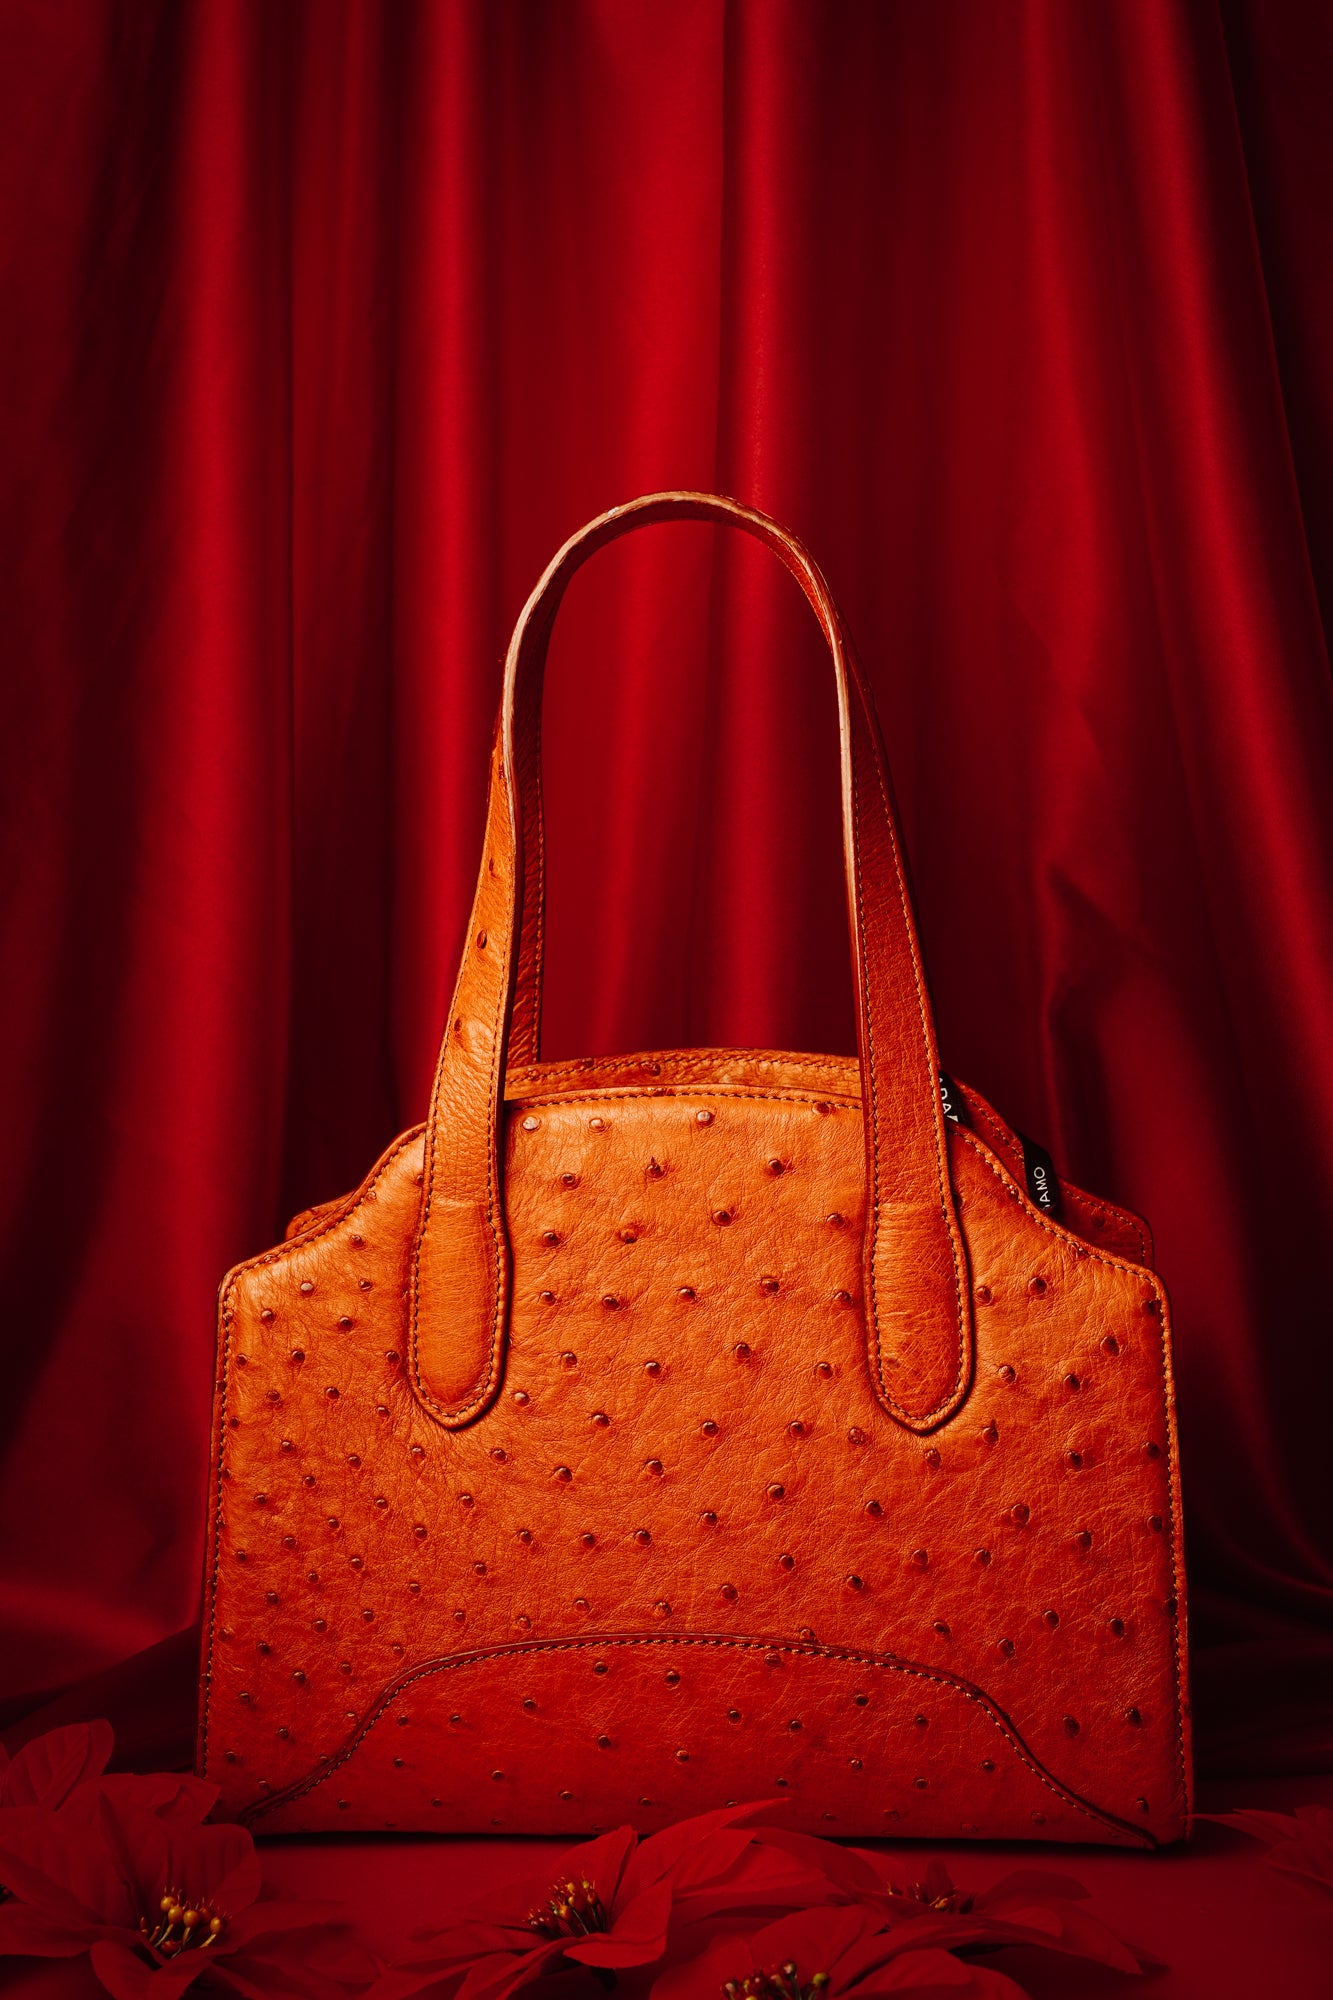 Handmade Ostrich Leather Handbag